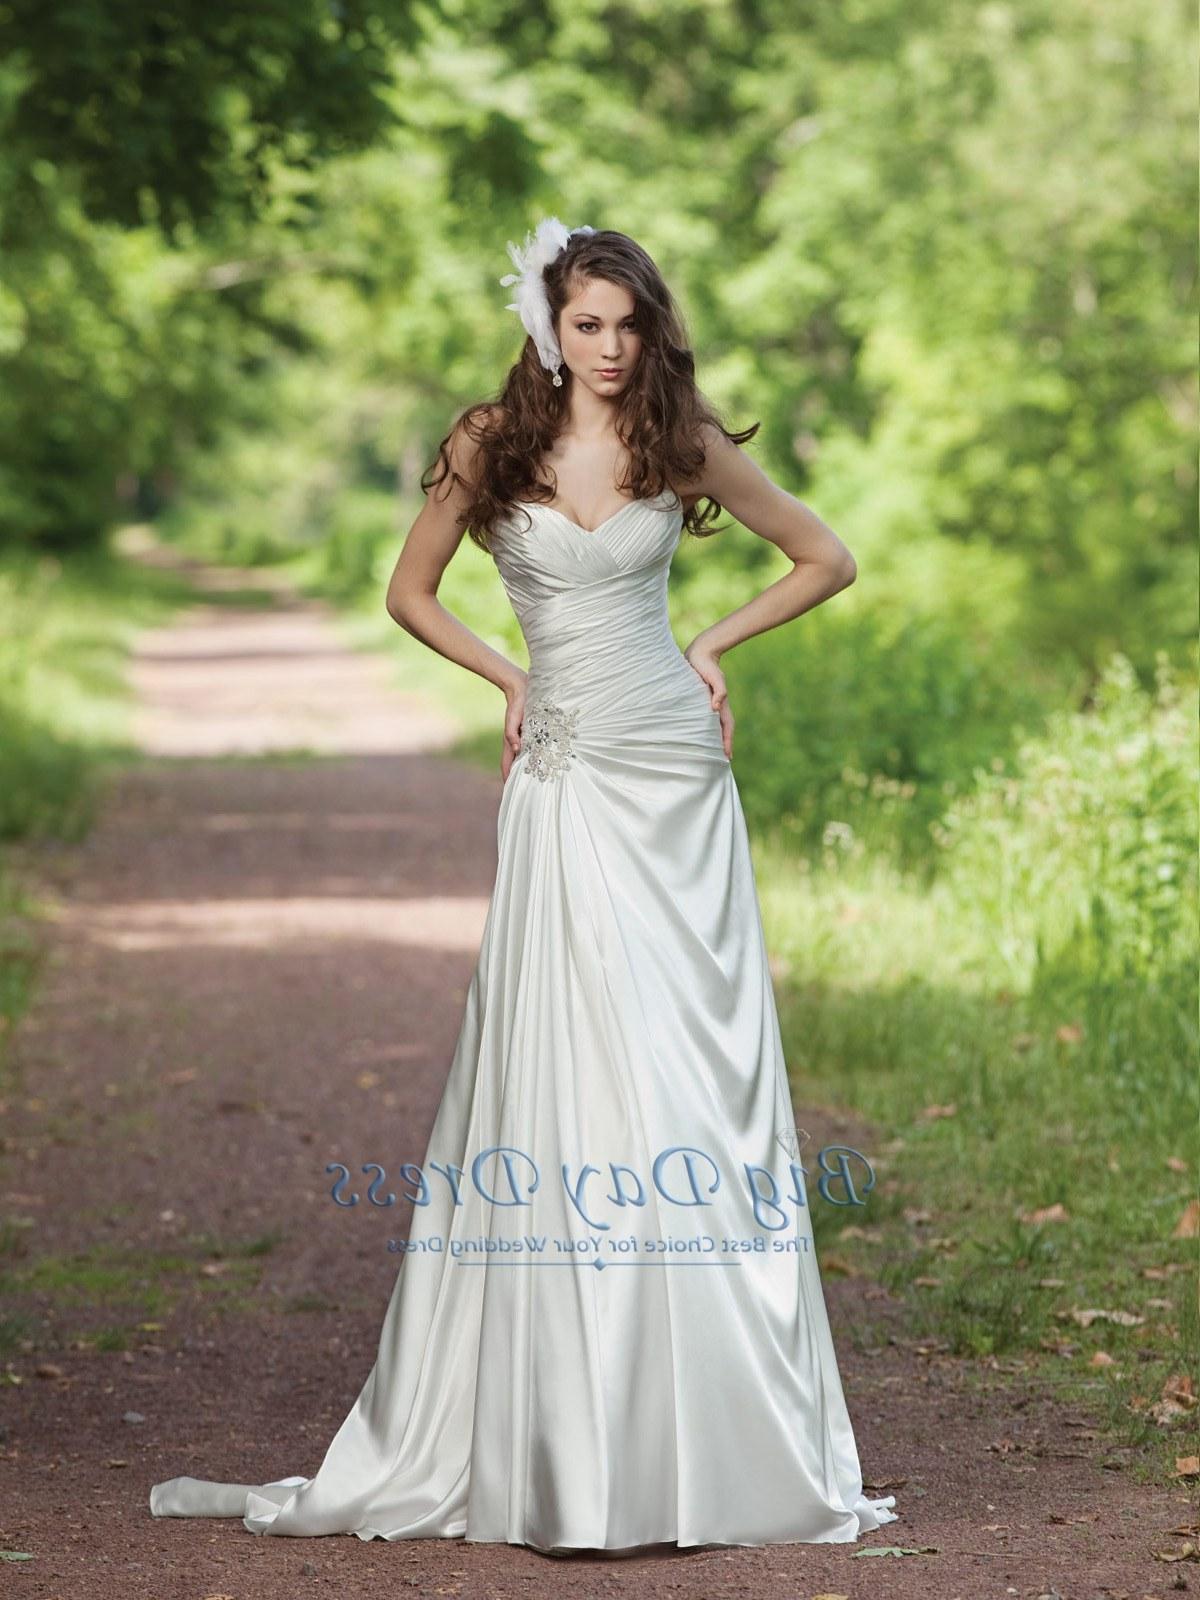 kathy ireland Wedding Dress by 2be Style G231115